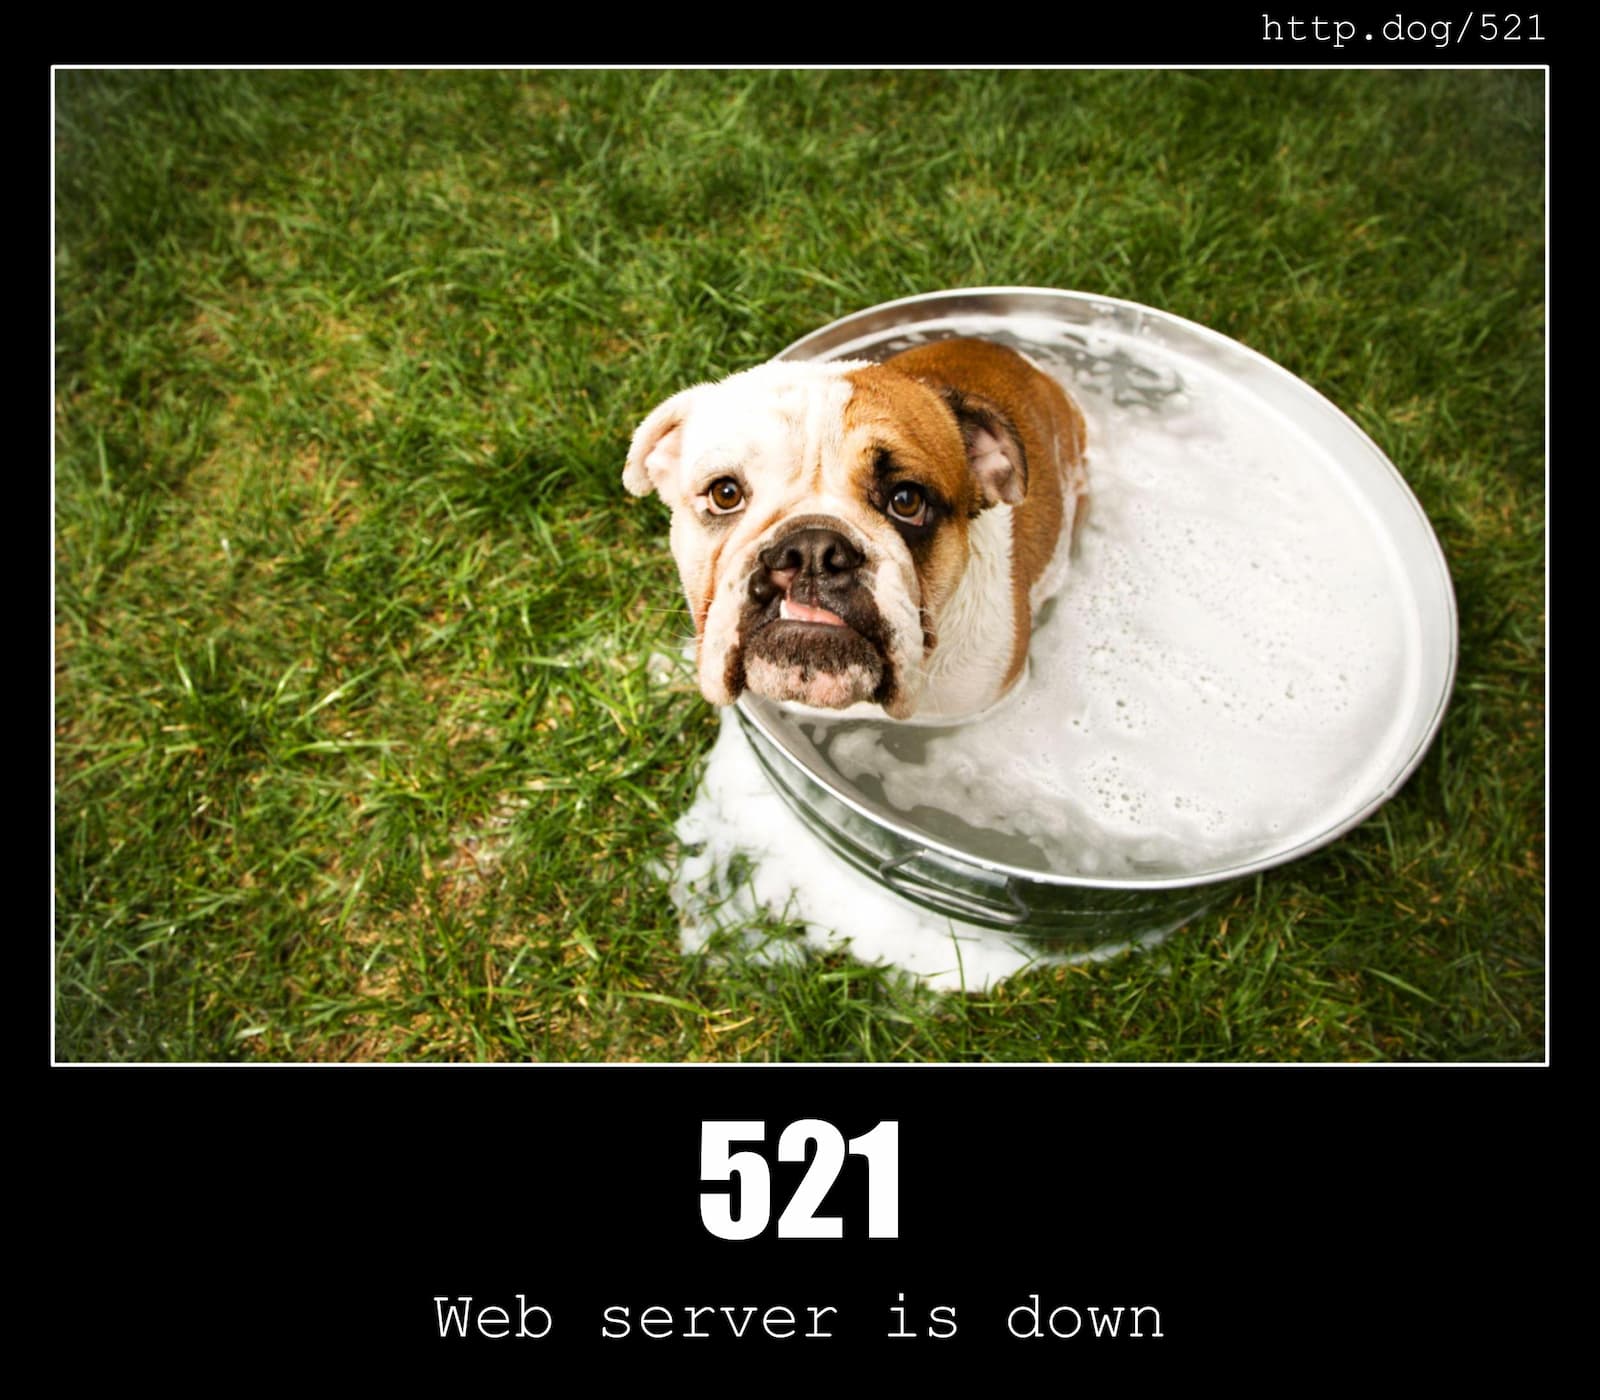 HTTP Status Code 521 Web server is down